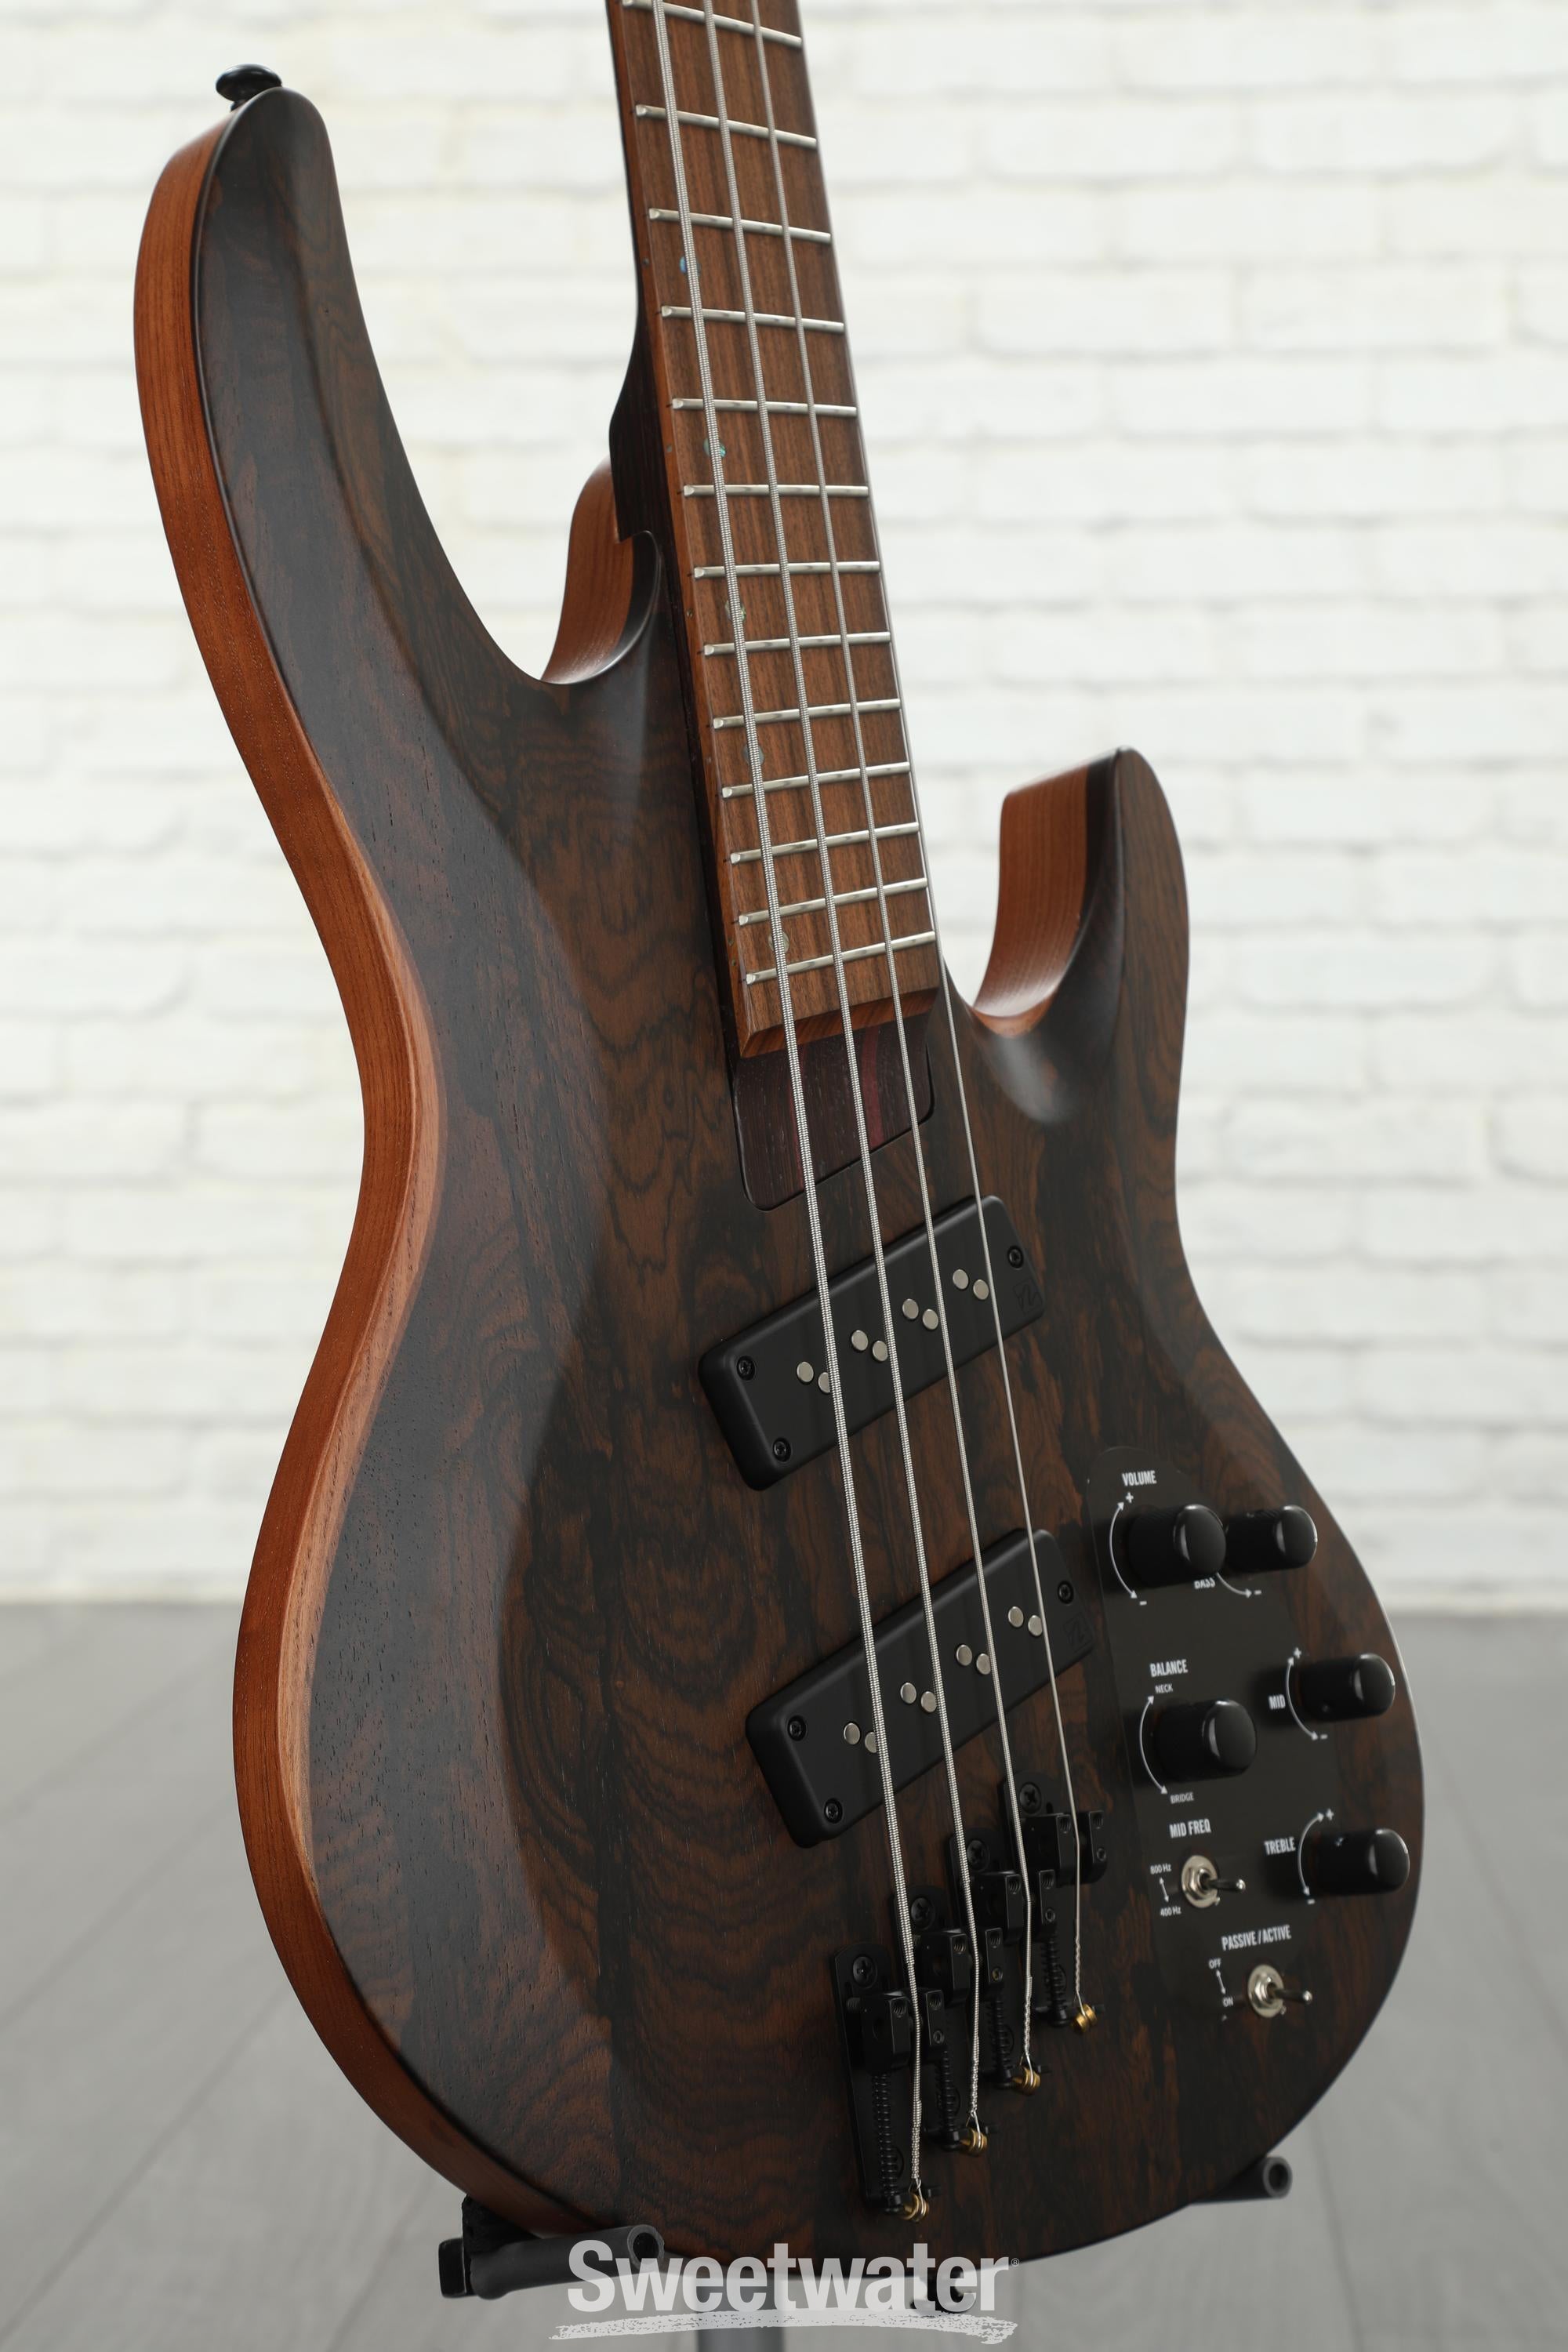 ESP LTD B-1004 Multi-Scale Bass Guitar - Natural Satin